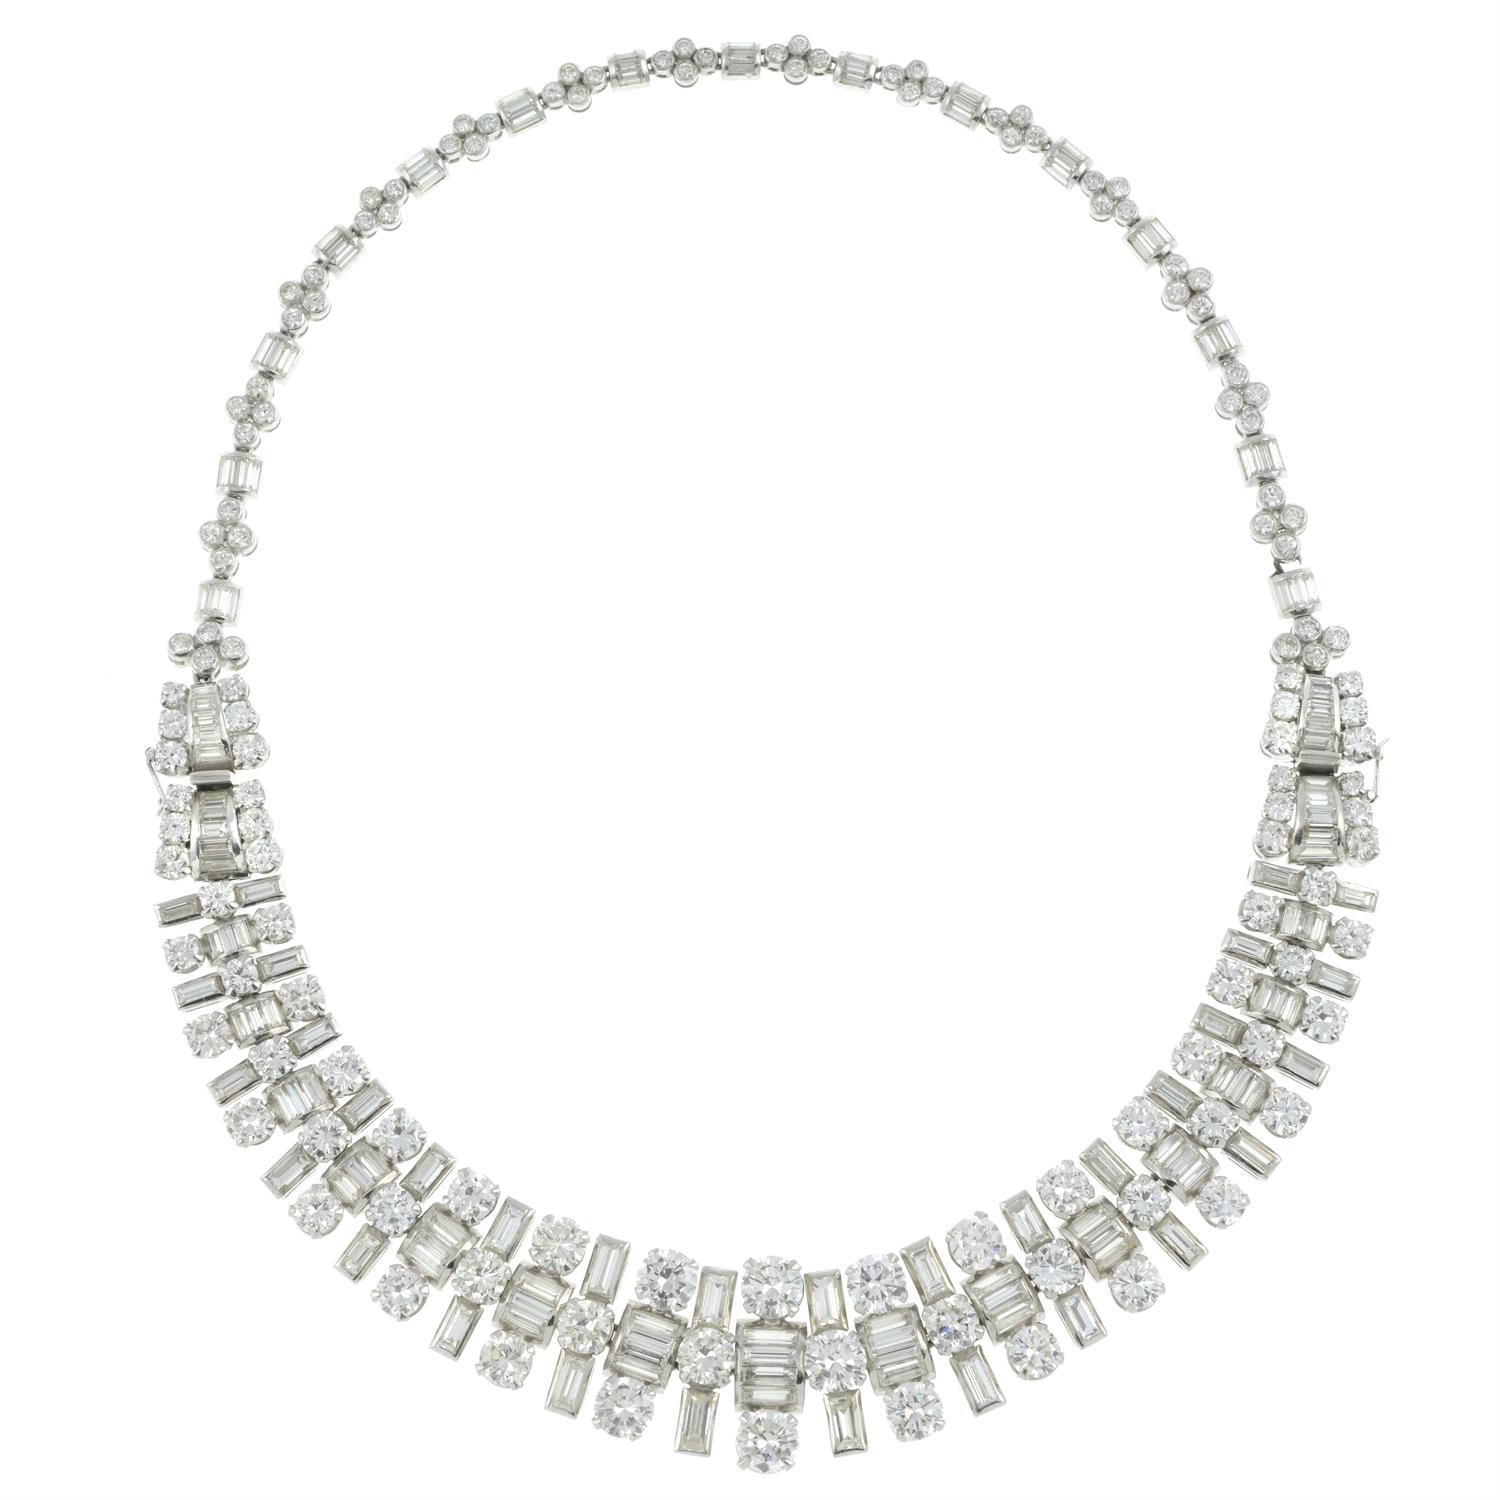 Mid 20th century platinum diamond necklace/bracelets - Image 2 of 6